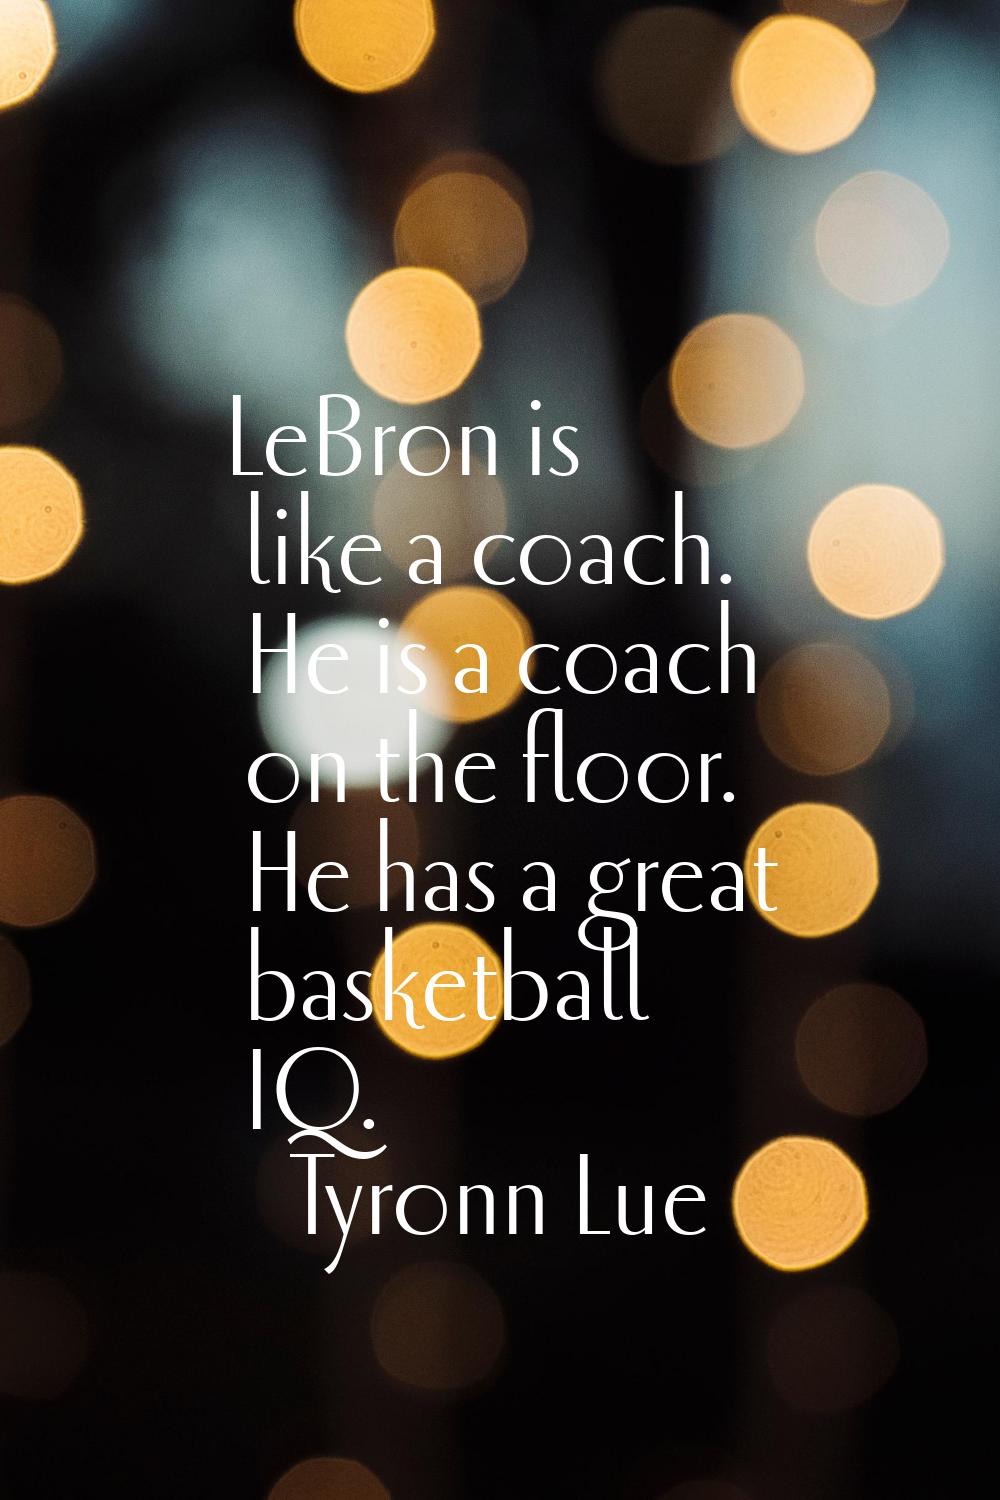 LeBron is like a coach. He is a coach on the floor. He has a great basketball IQ.